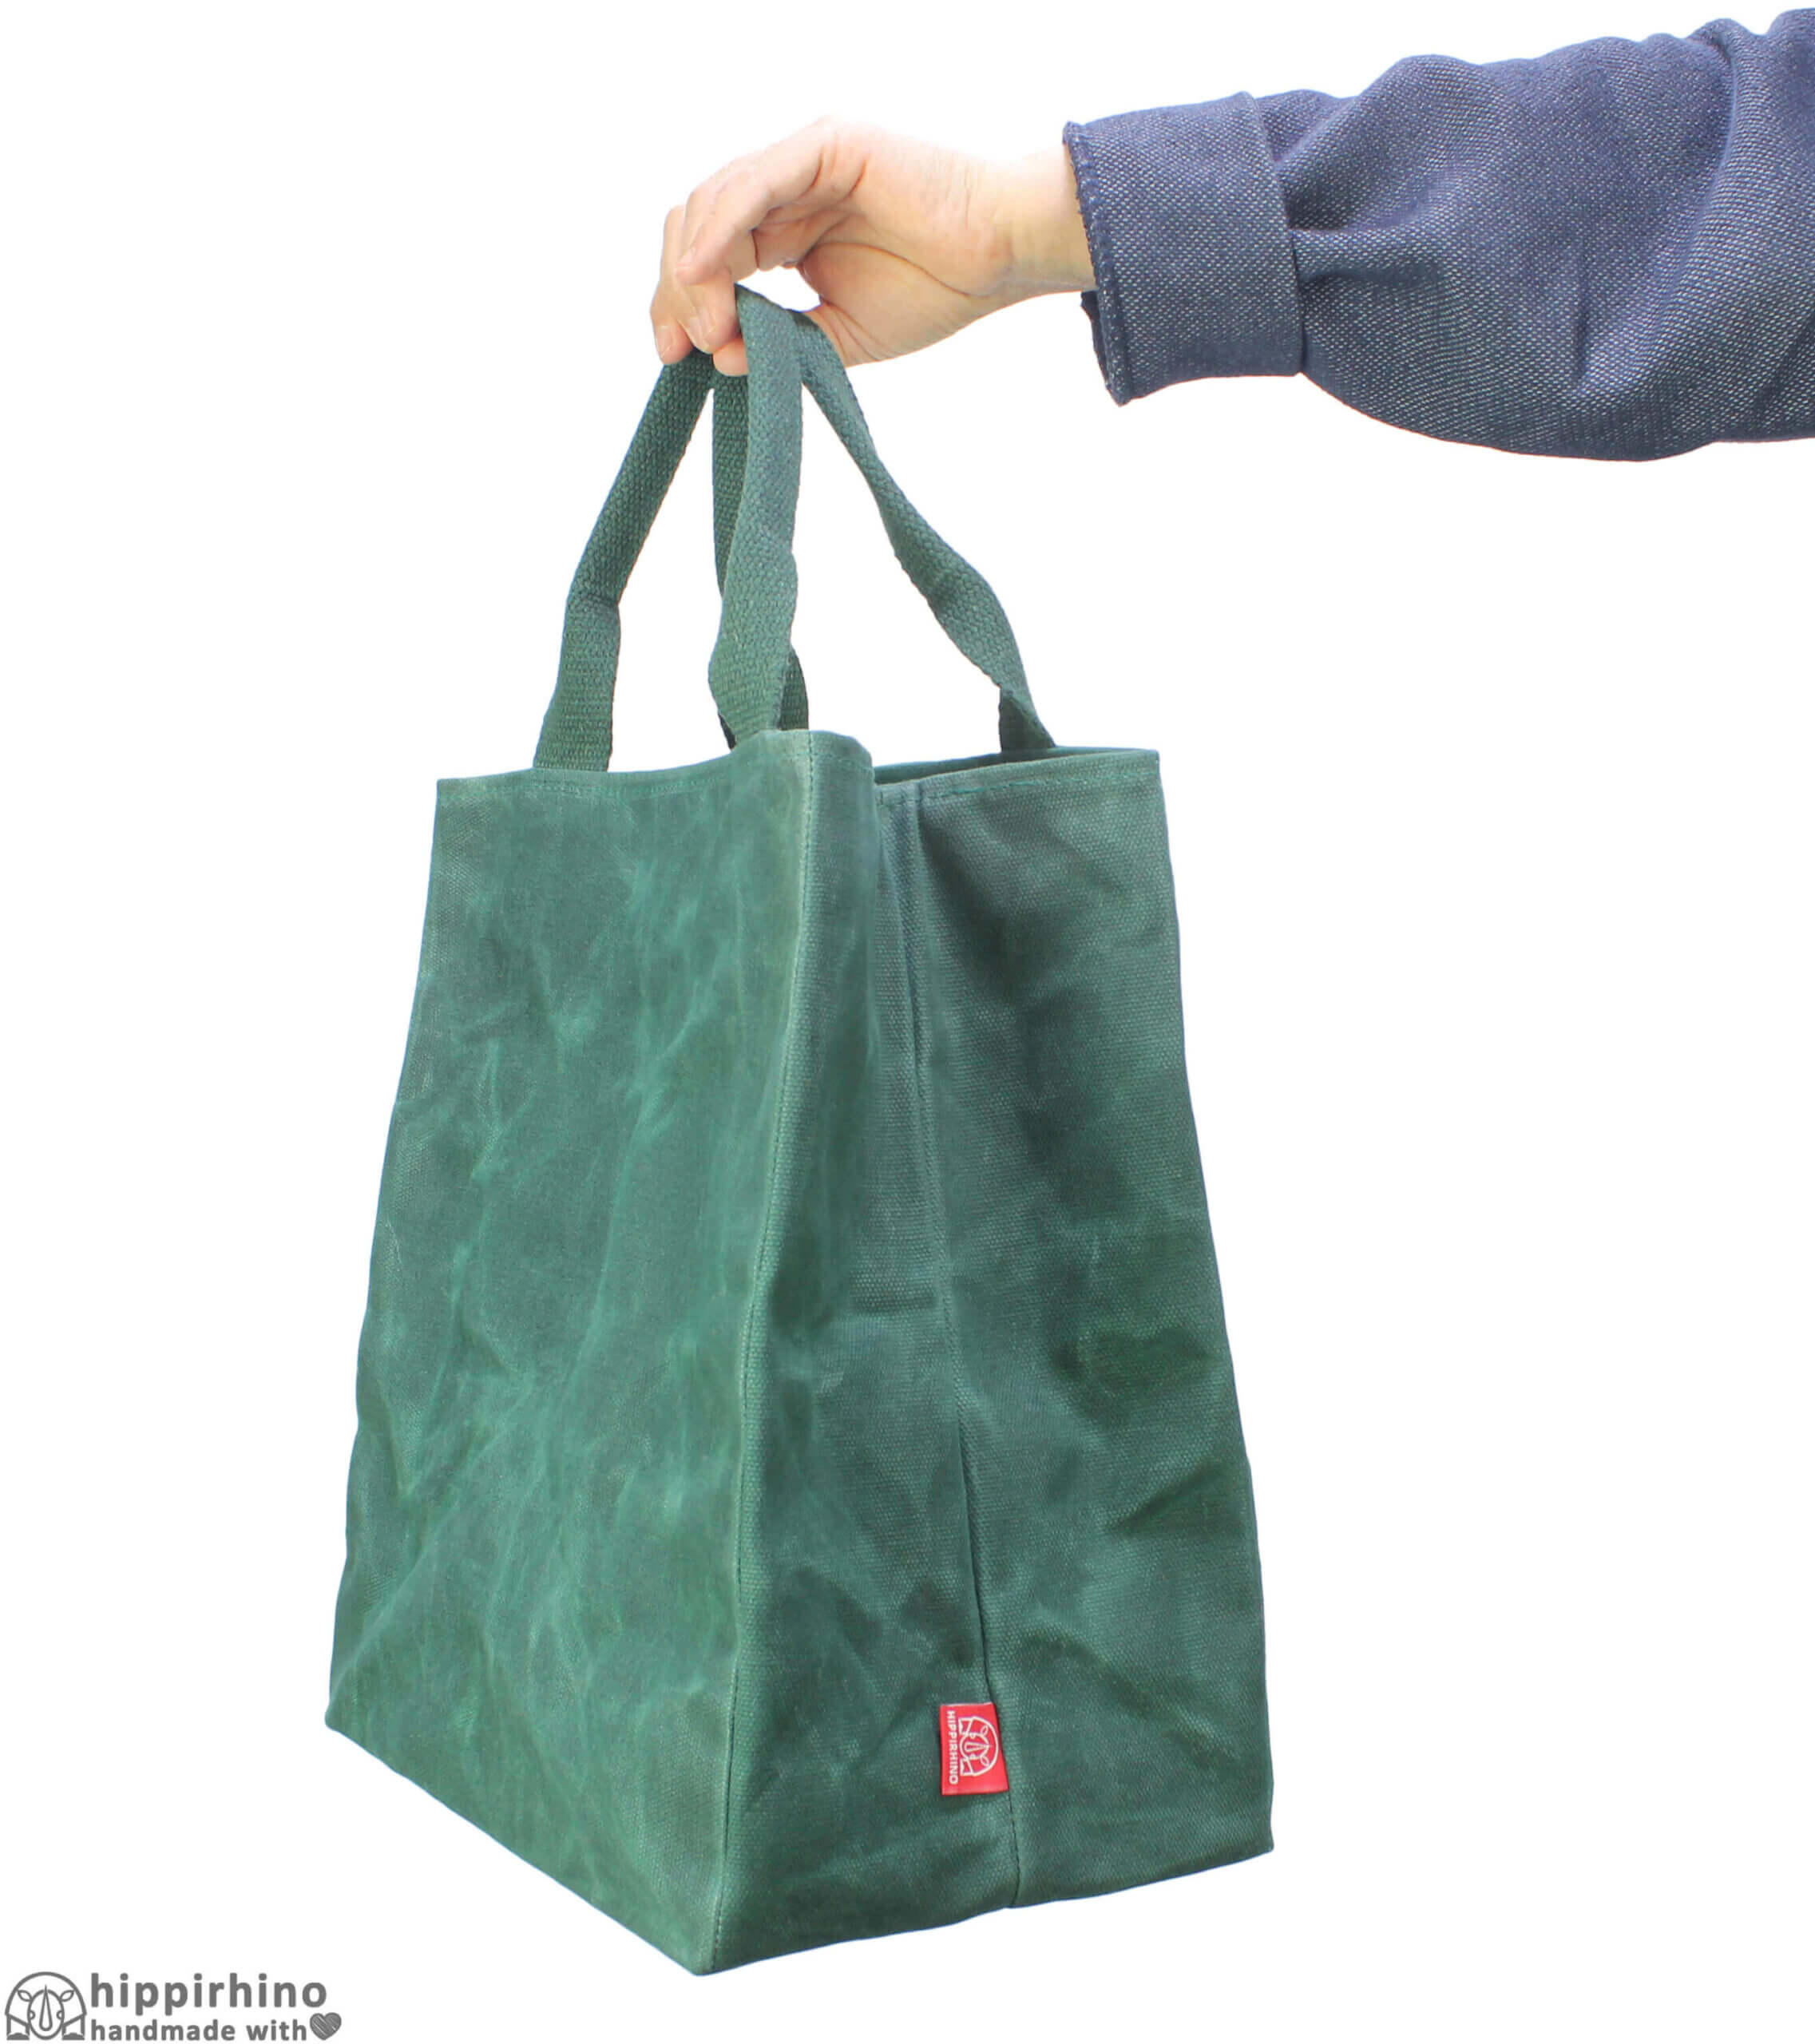 Handled Eco Shopping Cotton Canvas Bag Extra Large Capacity